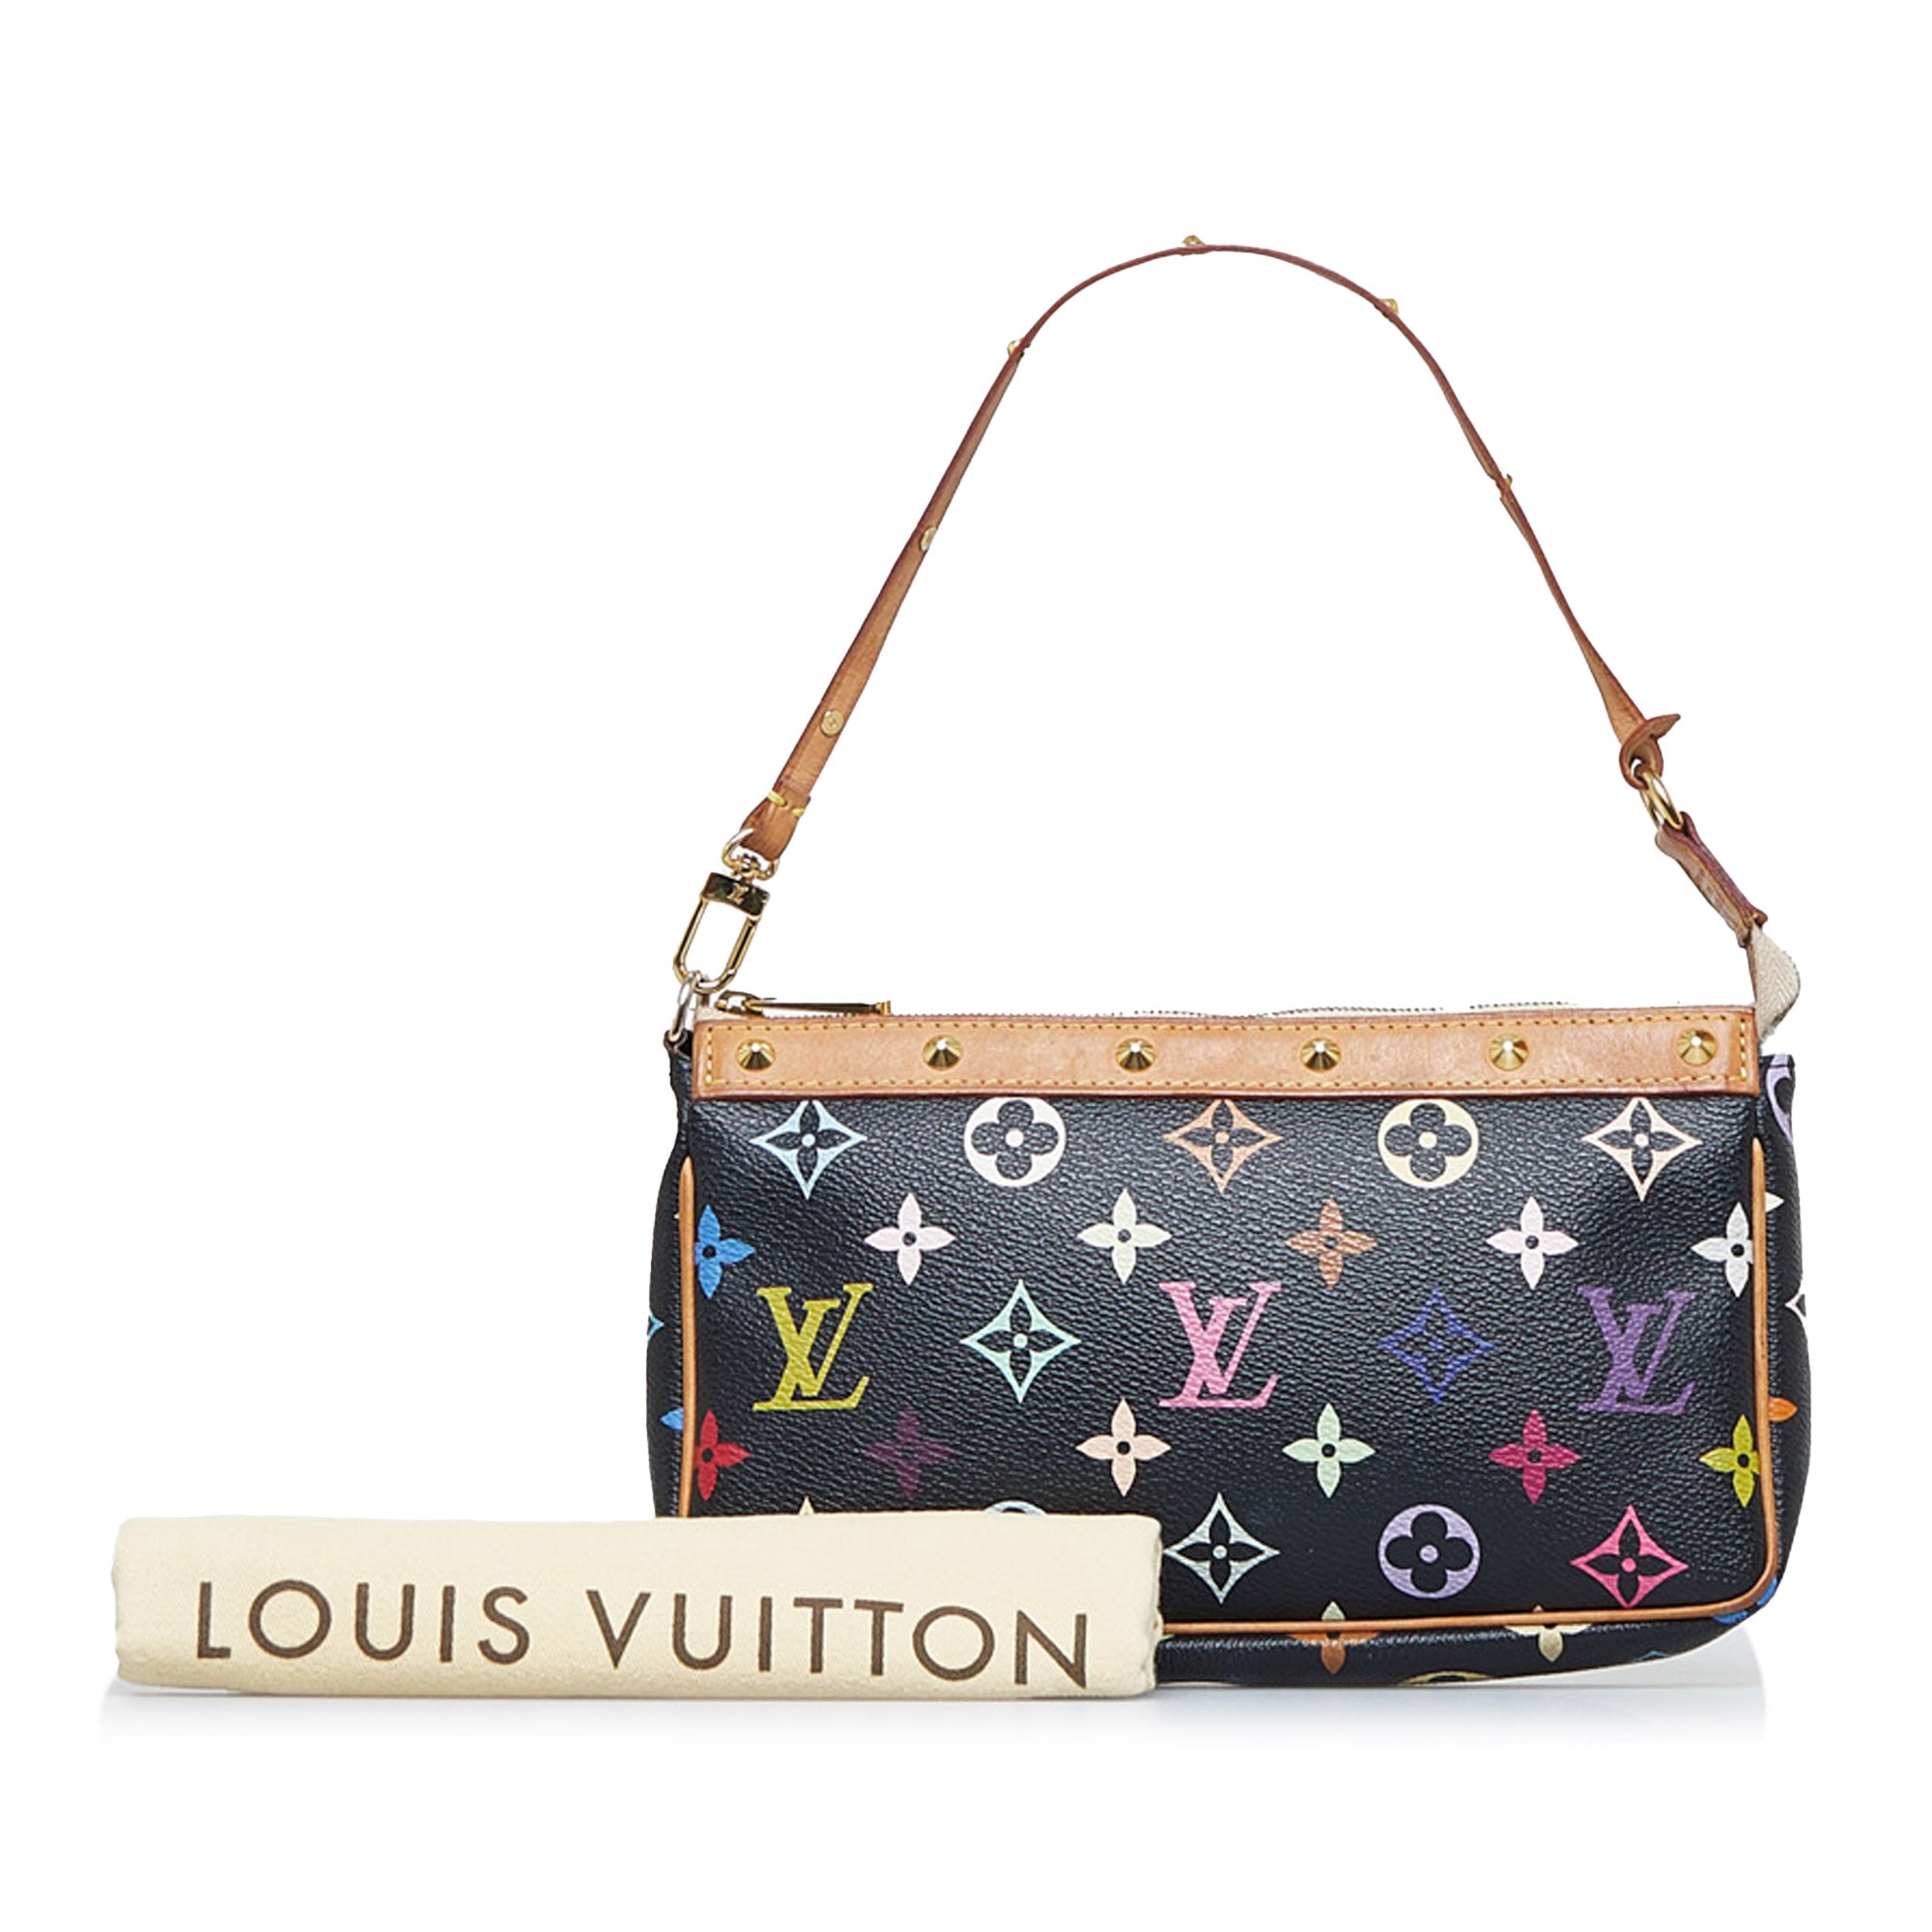 Louis Vuitton - Authenticated Multi Pochette Accessoires Handbag - Leather Brown for Women, Very Good Condition